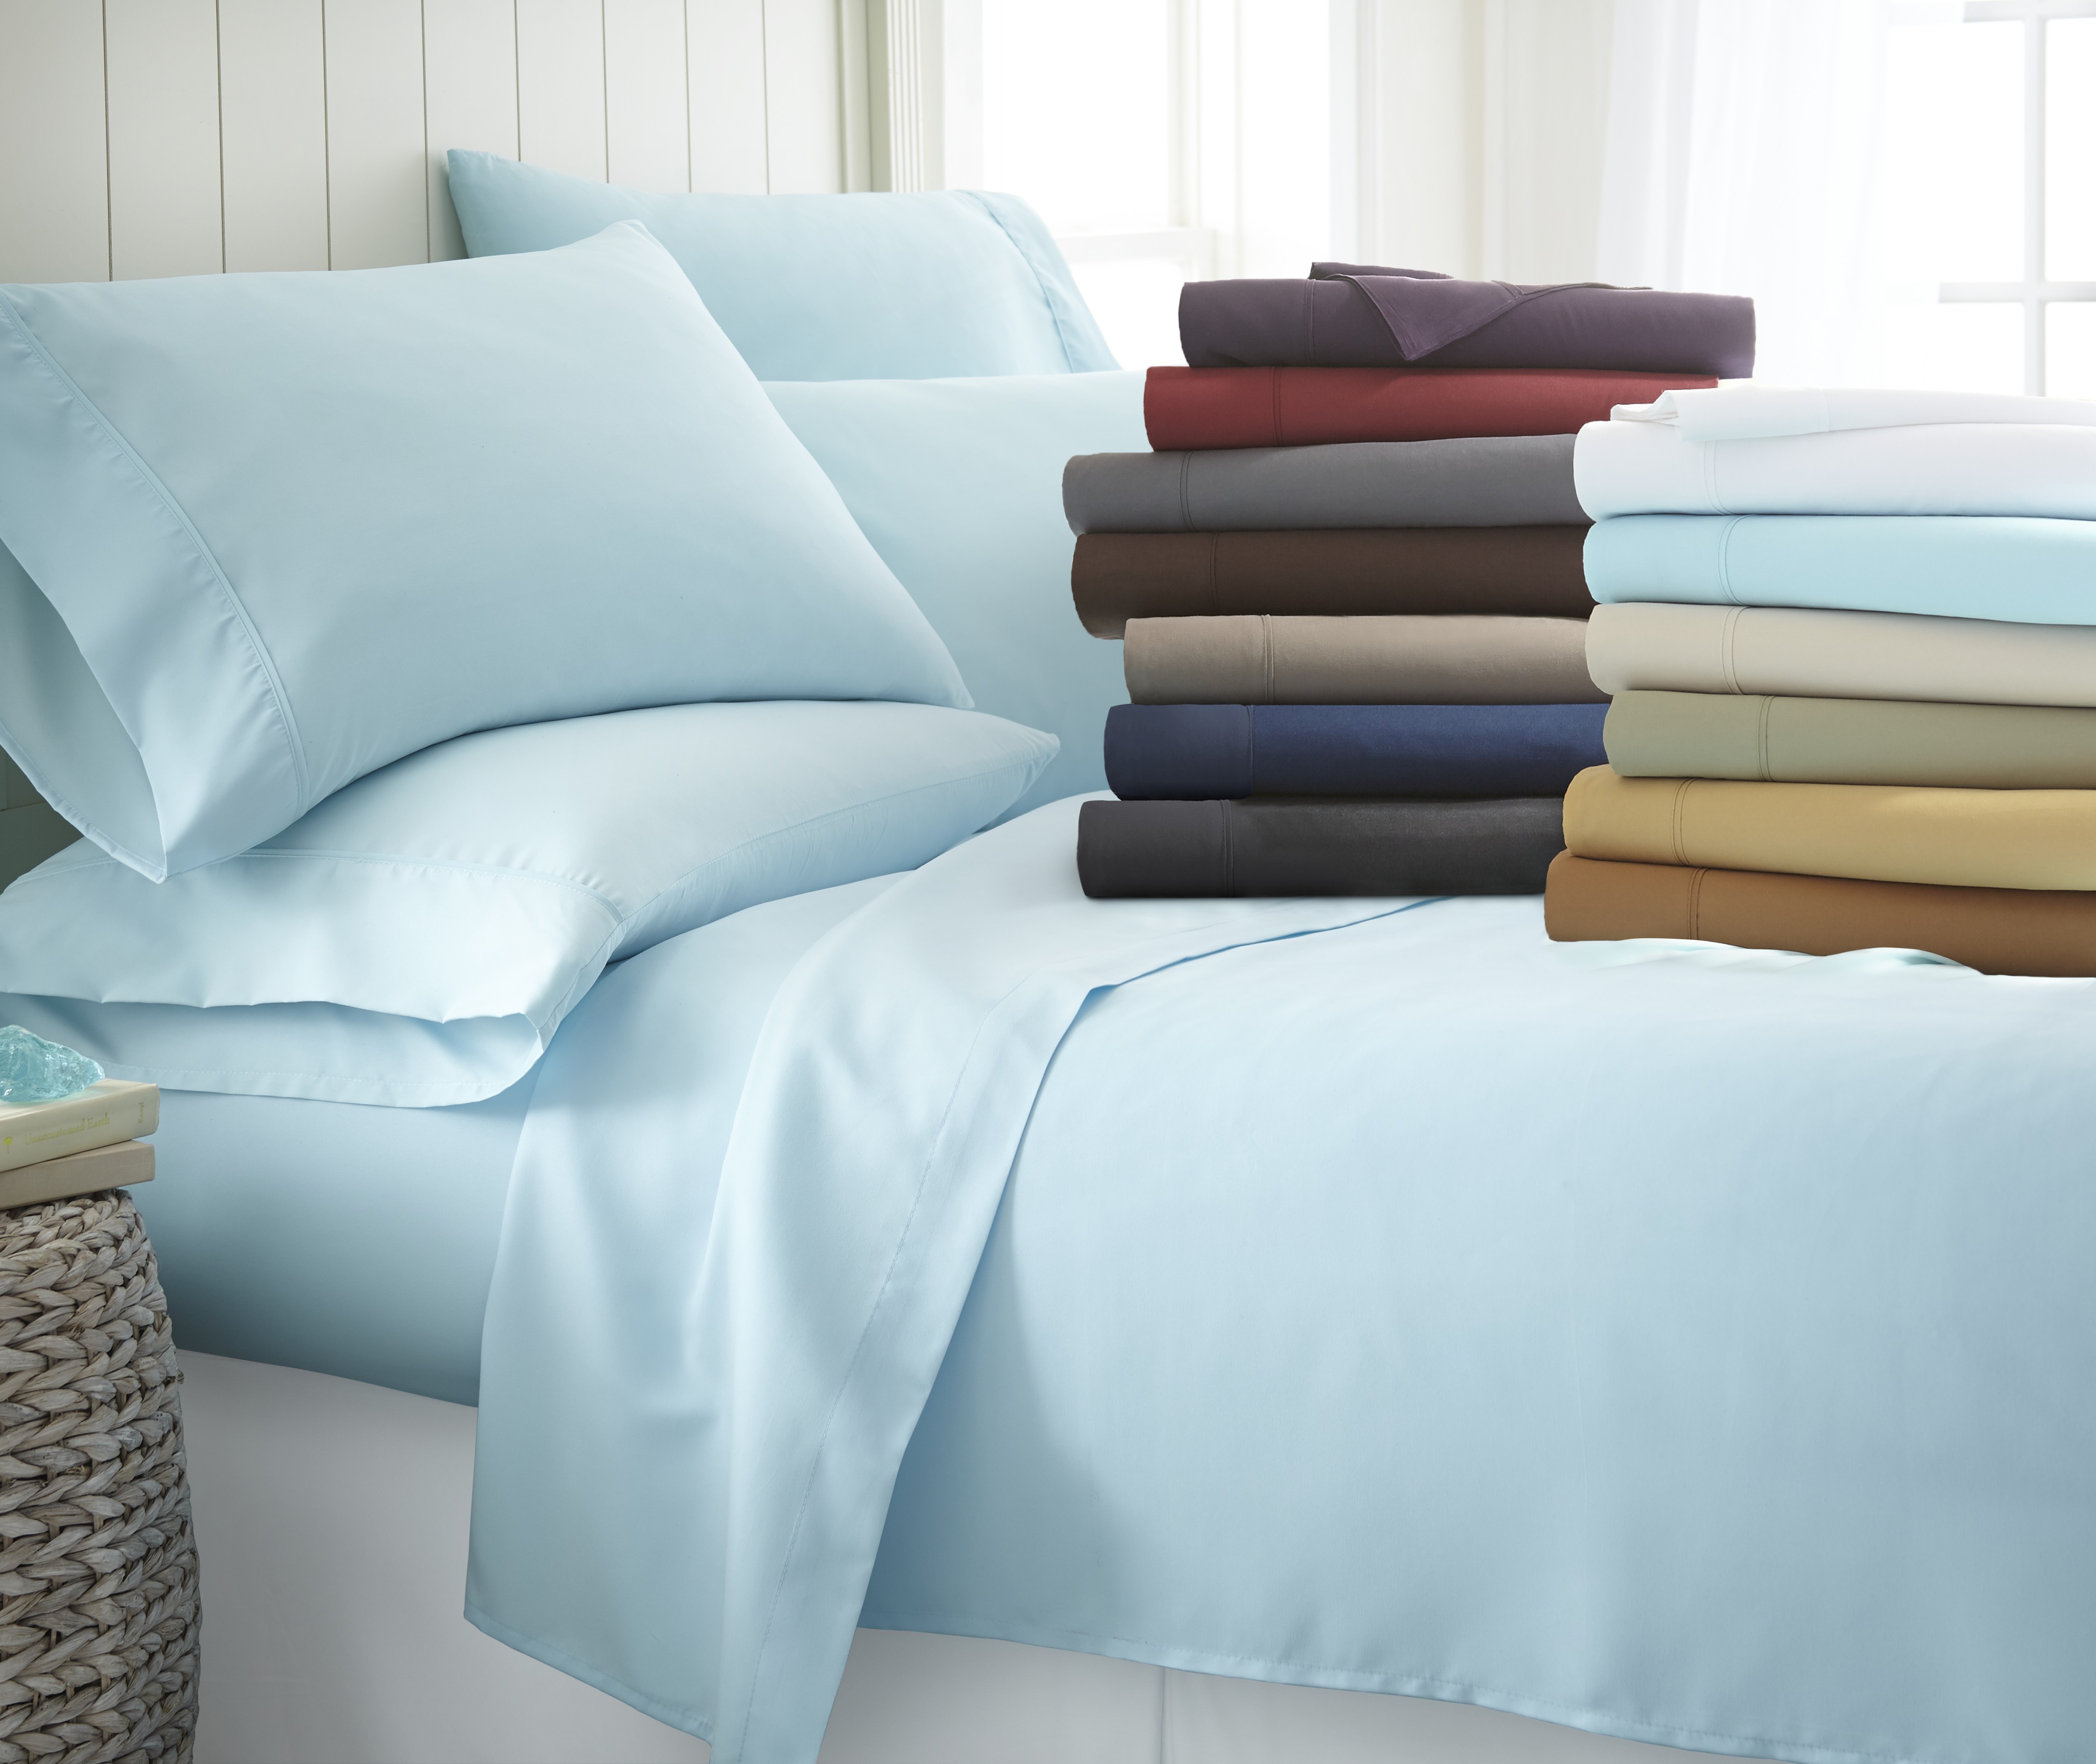 Premium Ultra Soft 6 Piece Bed Sheet Set Home Bed & Bath Bedding Sheets